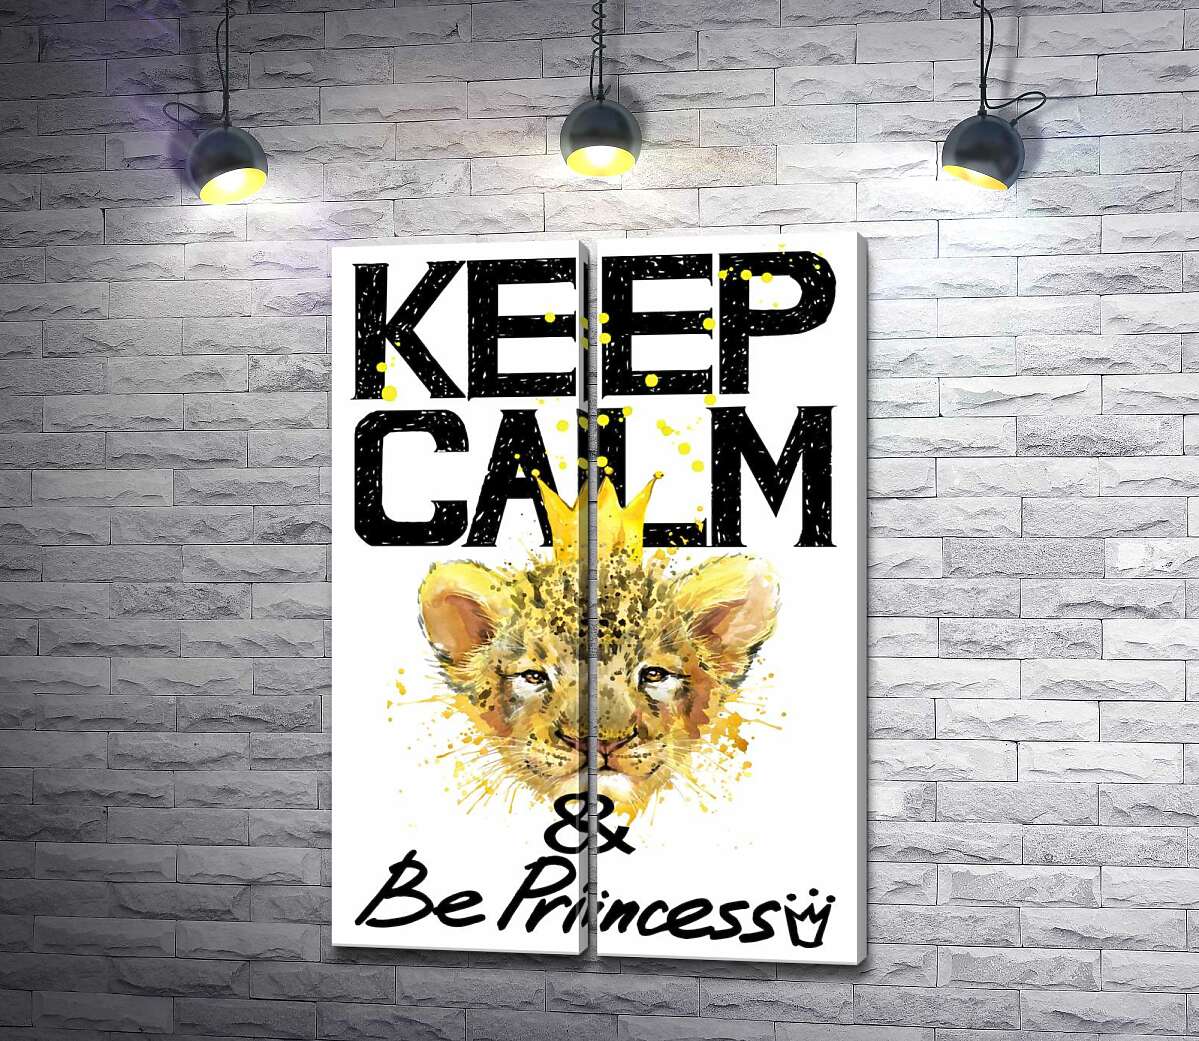 модульна картина Левеня в короні серед напису "keep calm and be princess"